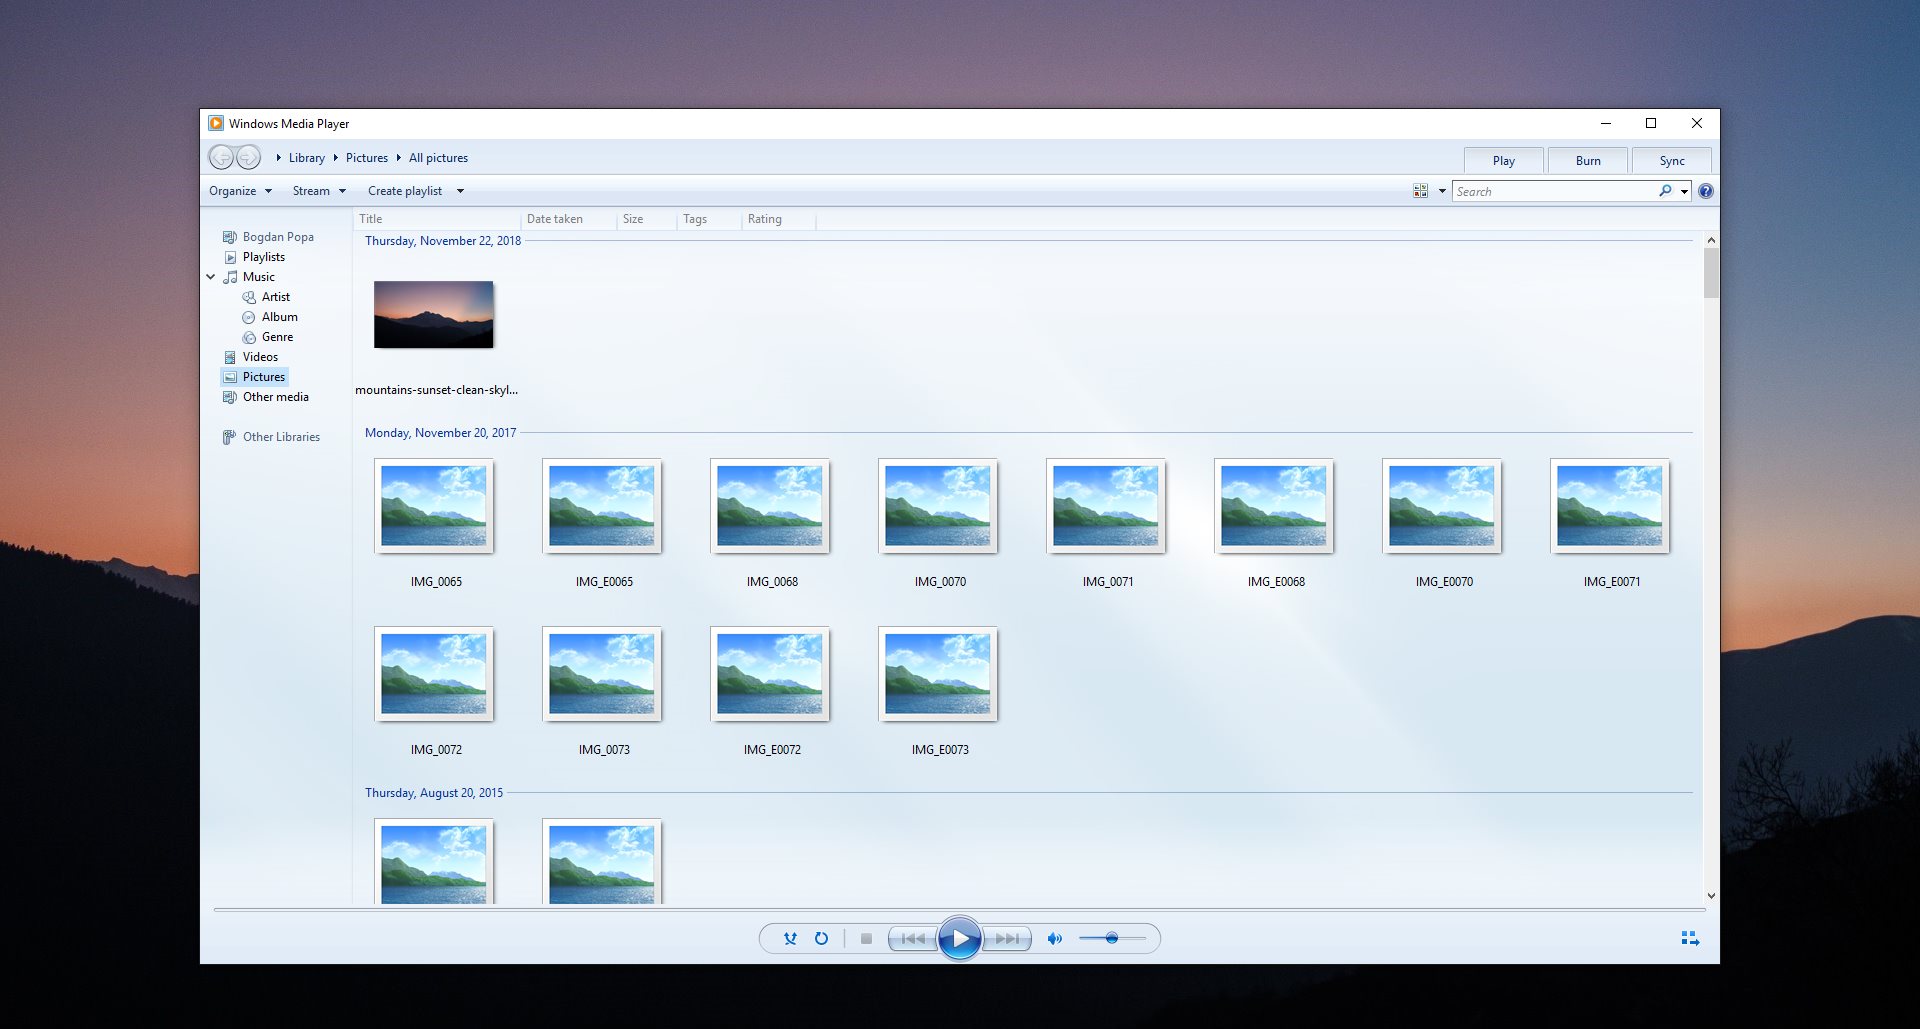 scangear tool download windows 10